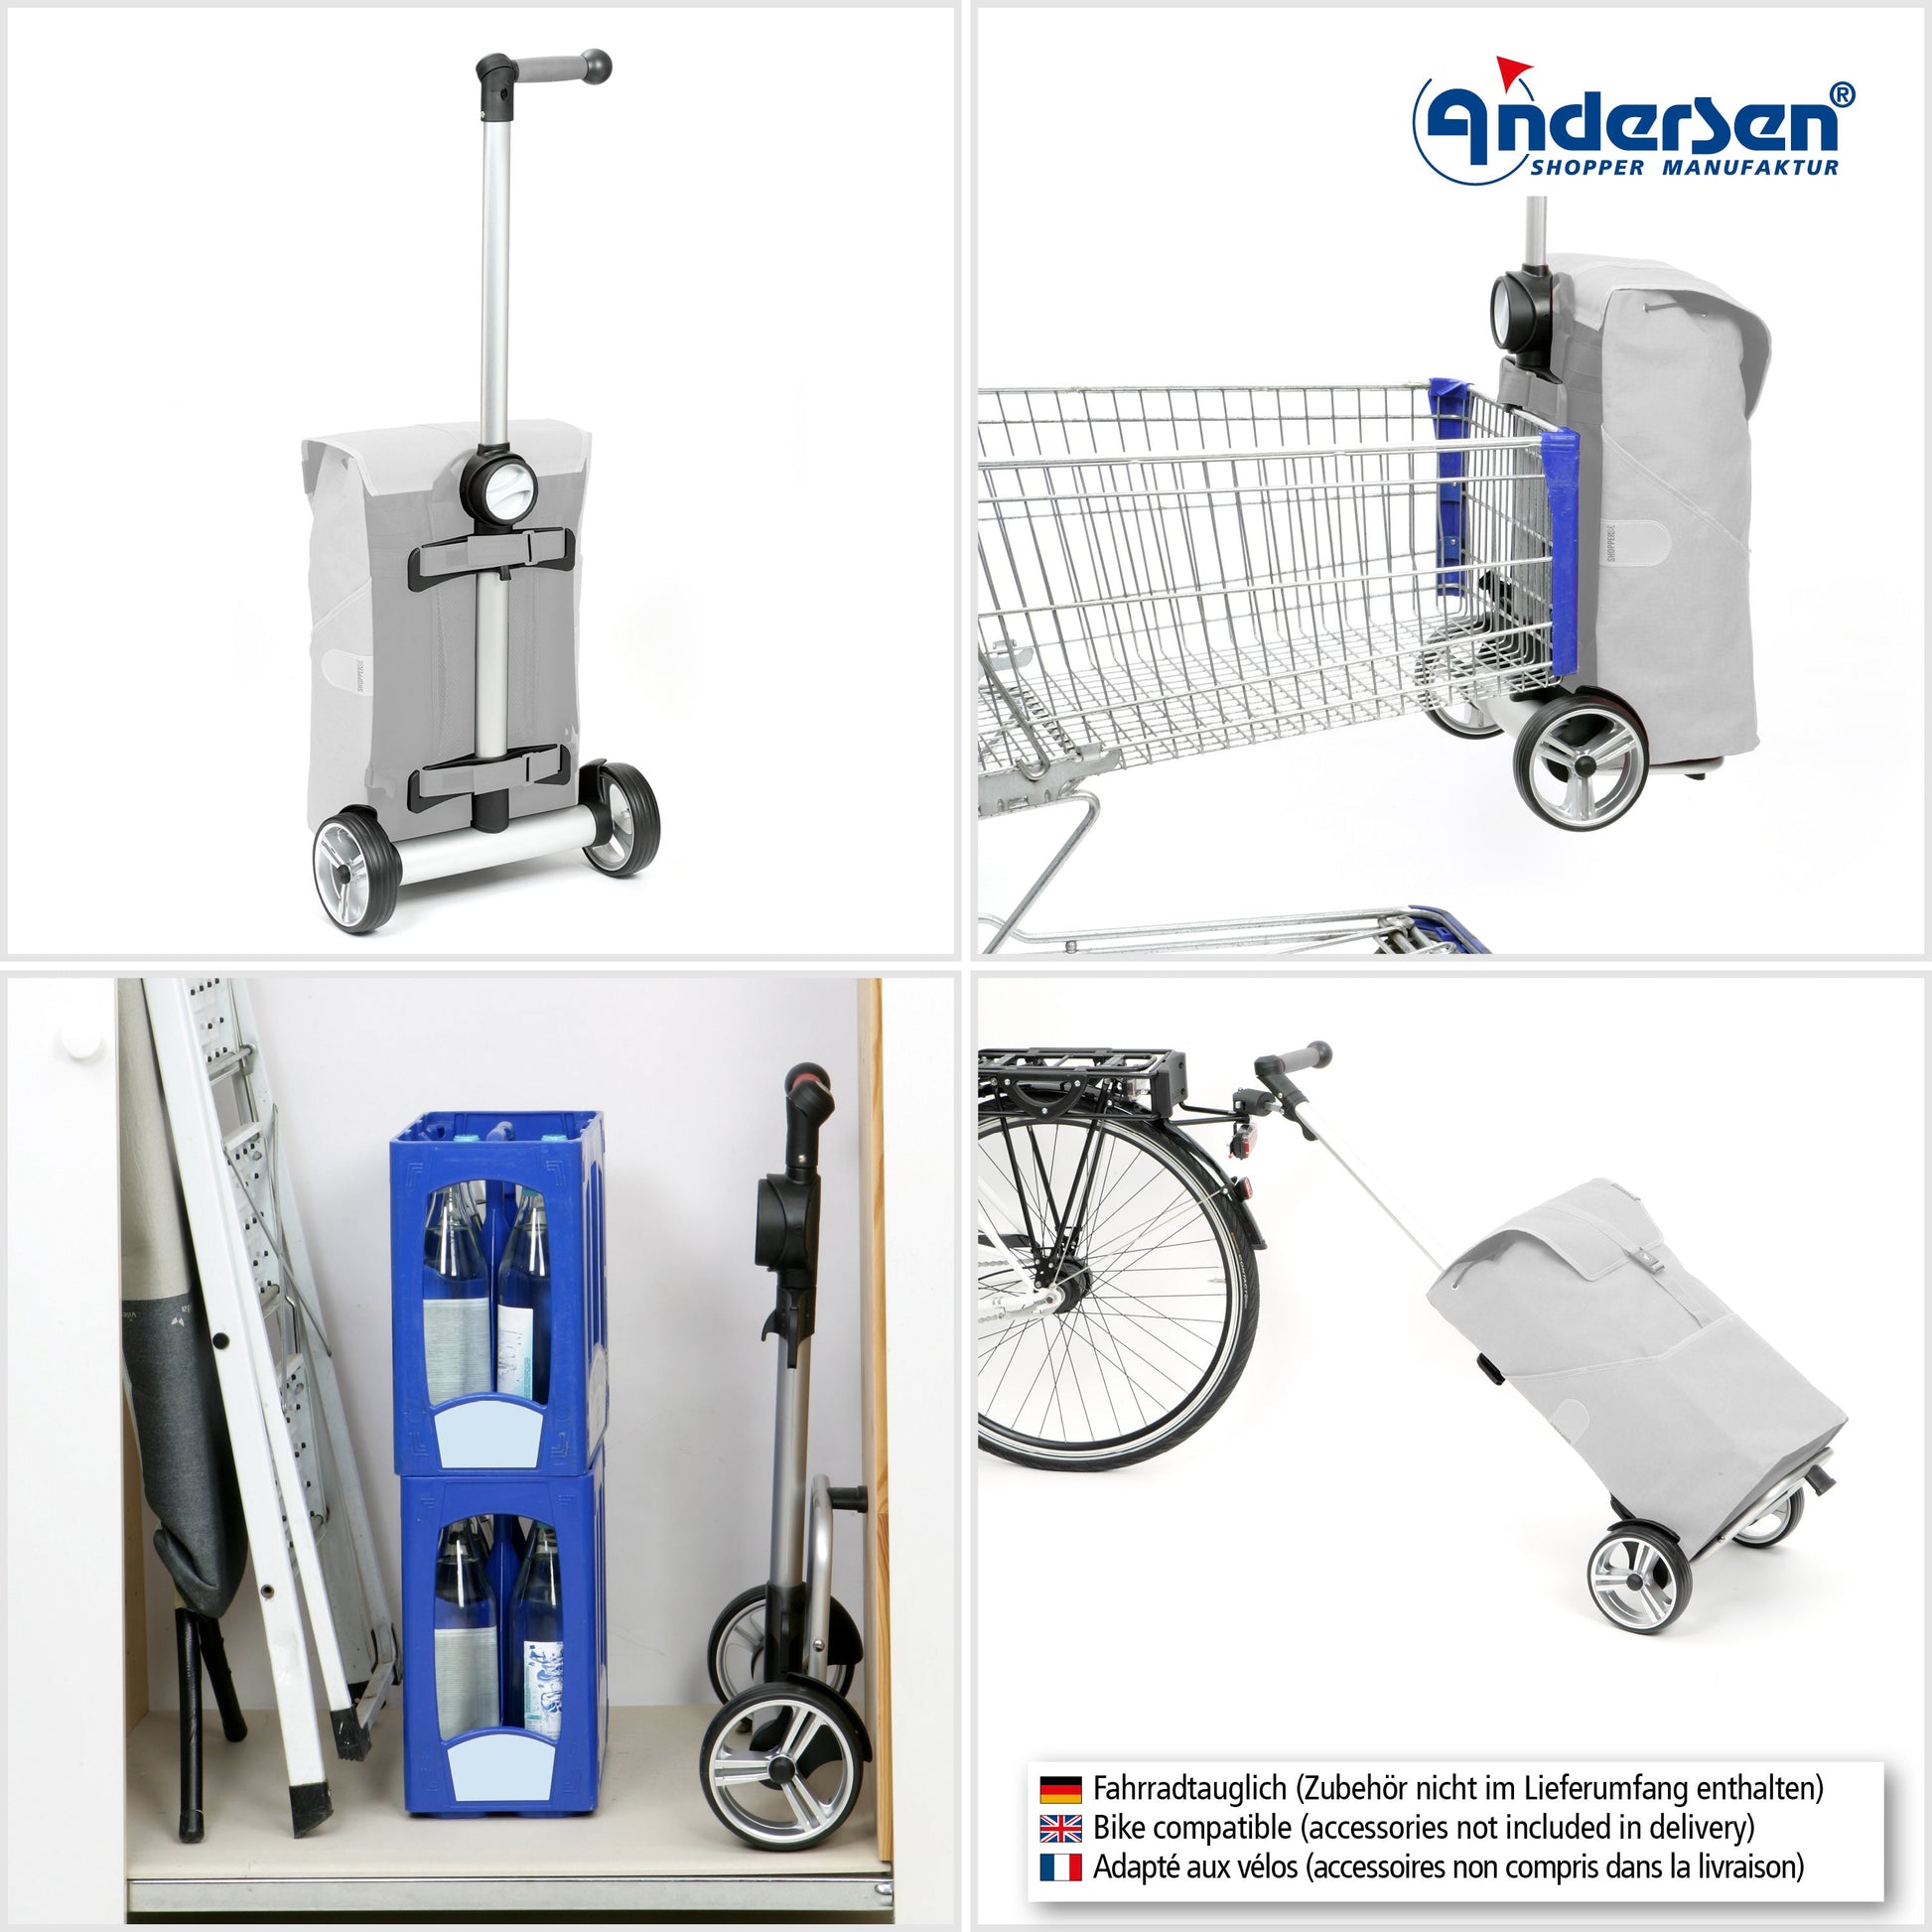 Andersen Shopper Manufaktur-Unus Shopper Gese rot-www.shopping-trolley.ch-bild5